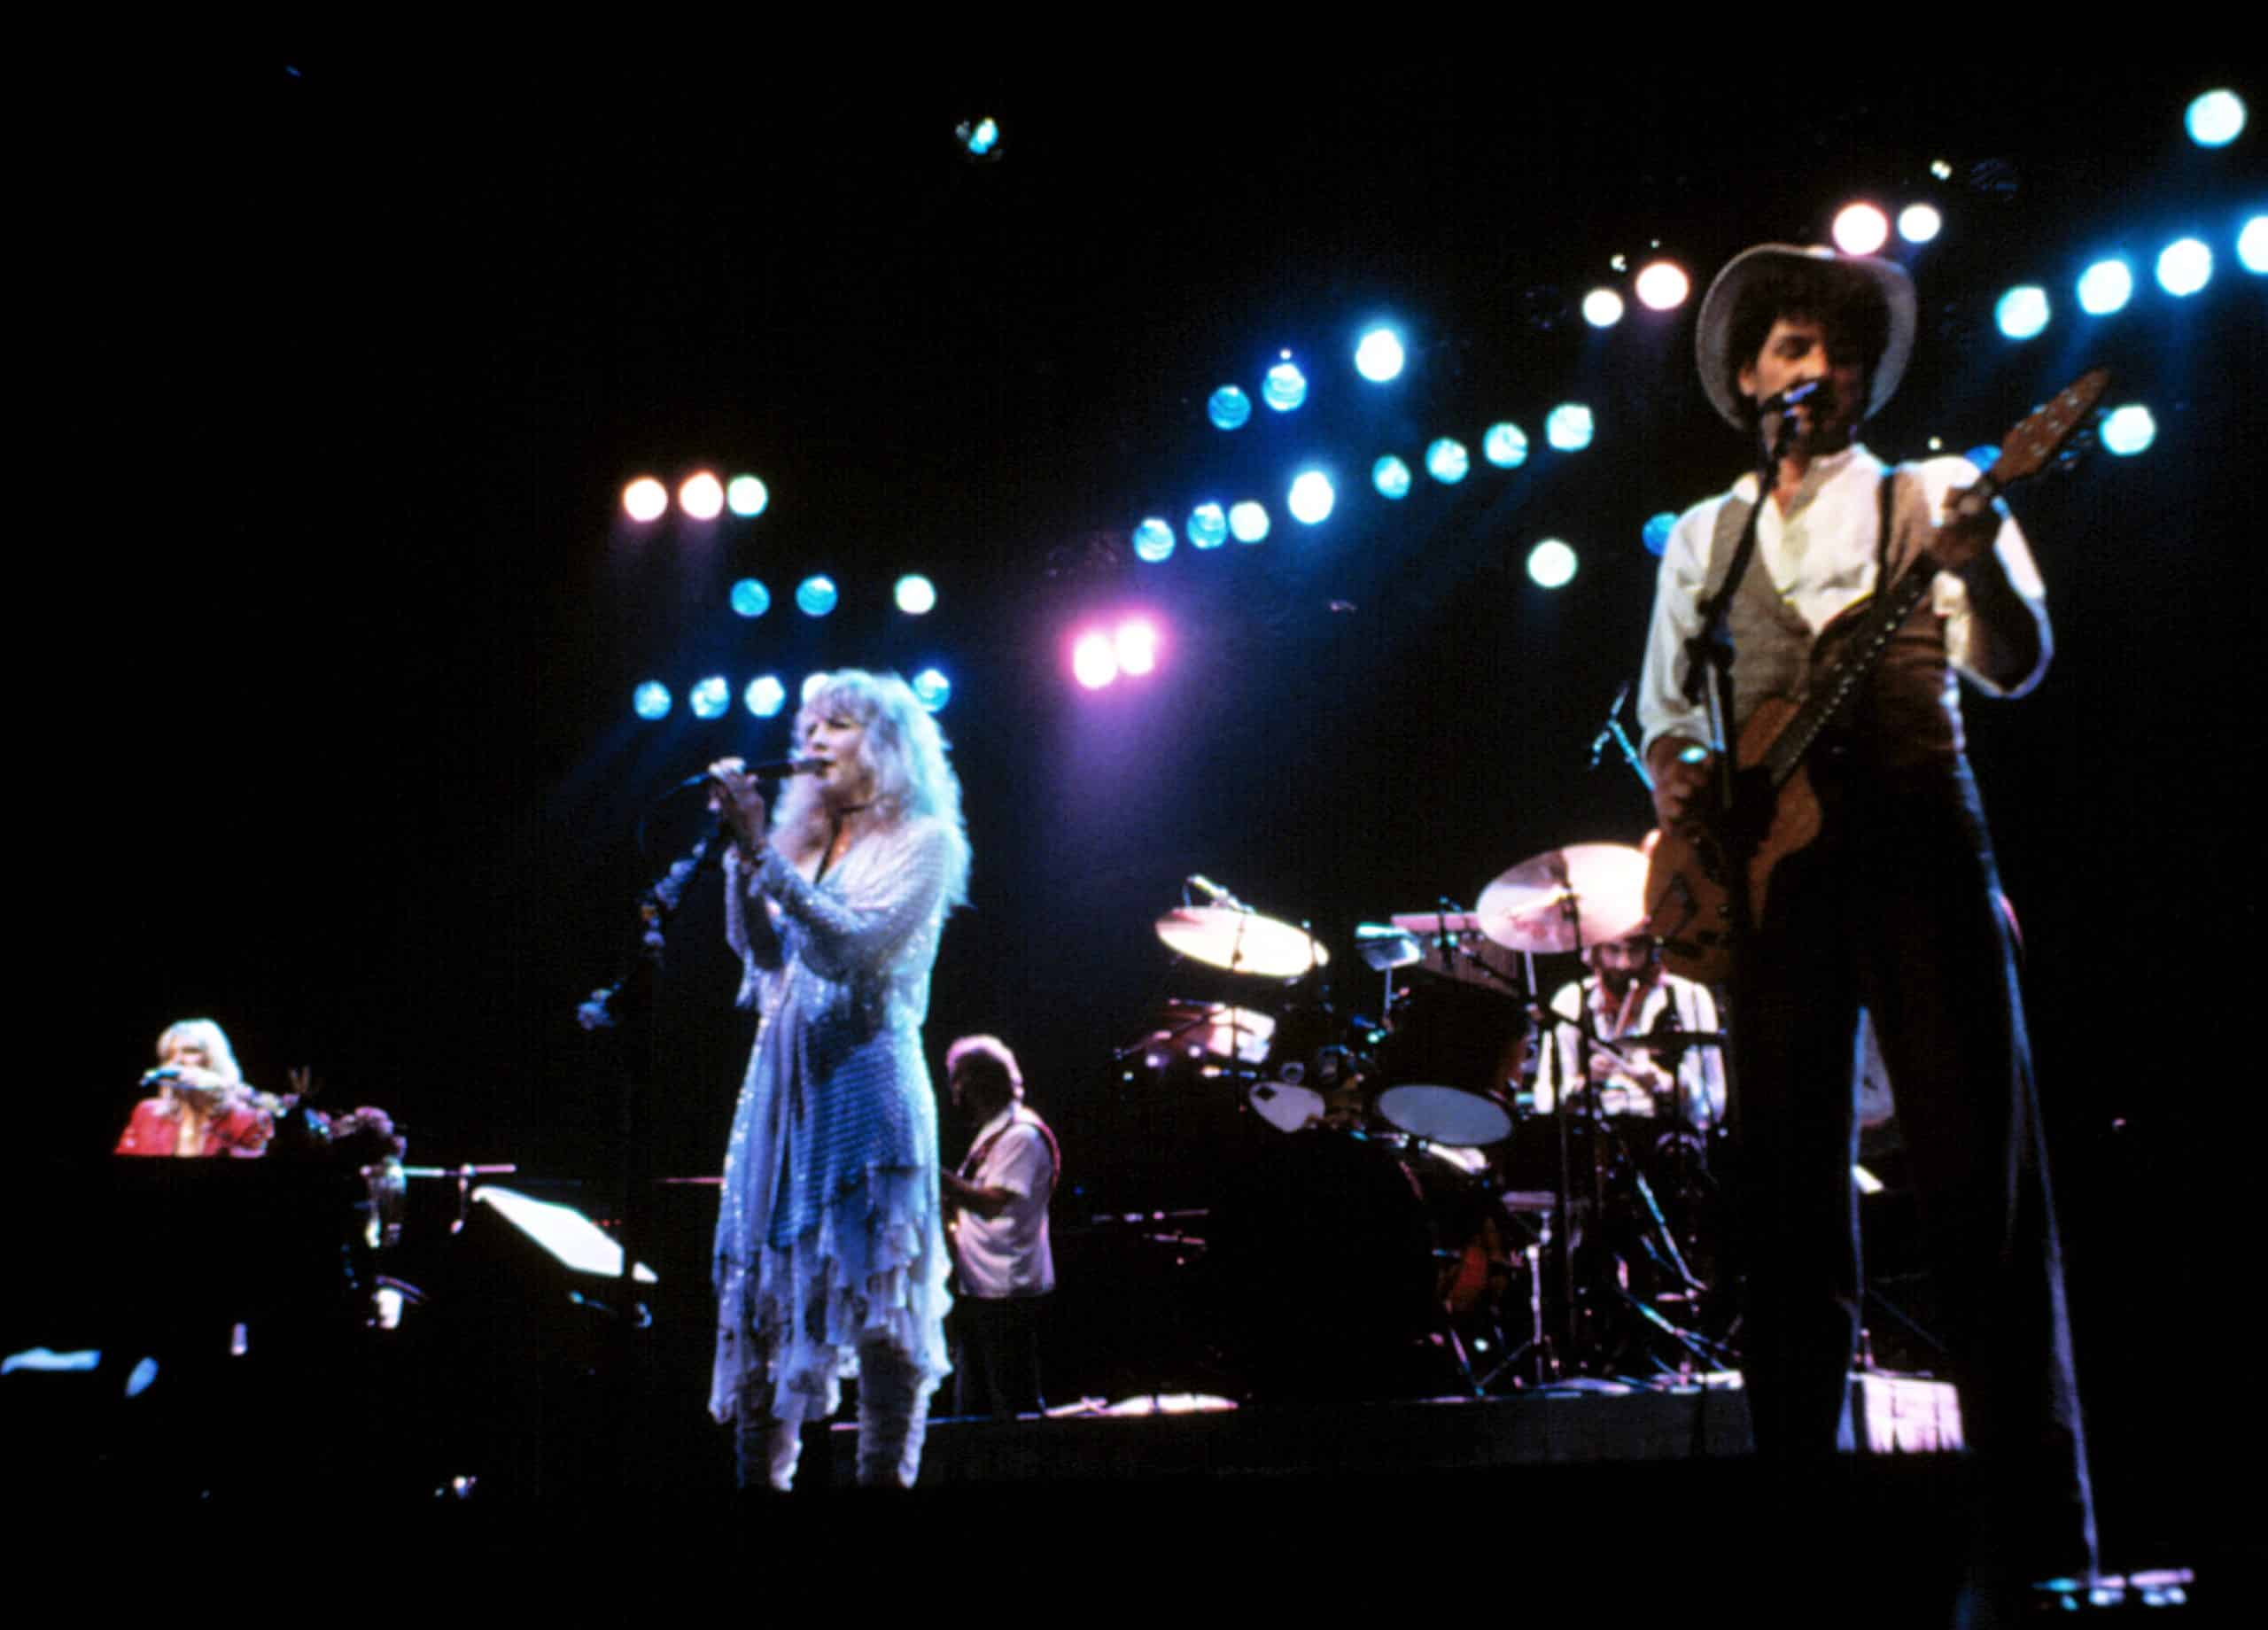 Fleetwood Mac, (Christine McVie, Stevie Nicks, Lindsey Buckingham), circa early 1980s